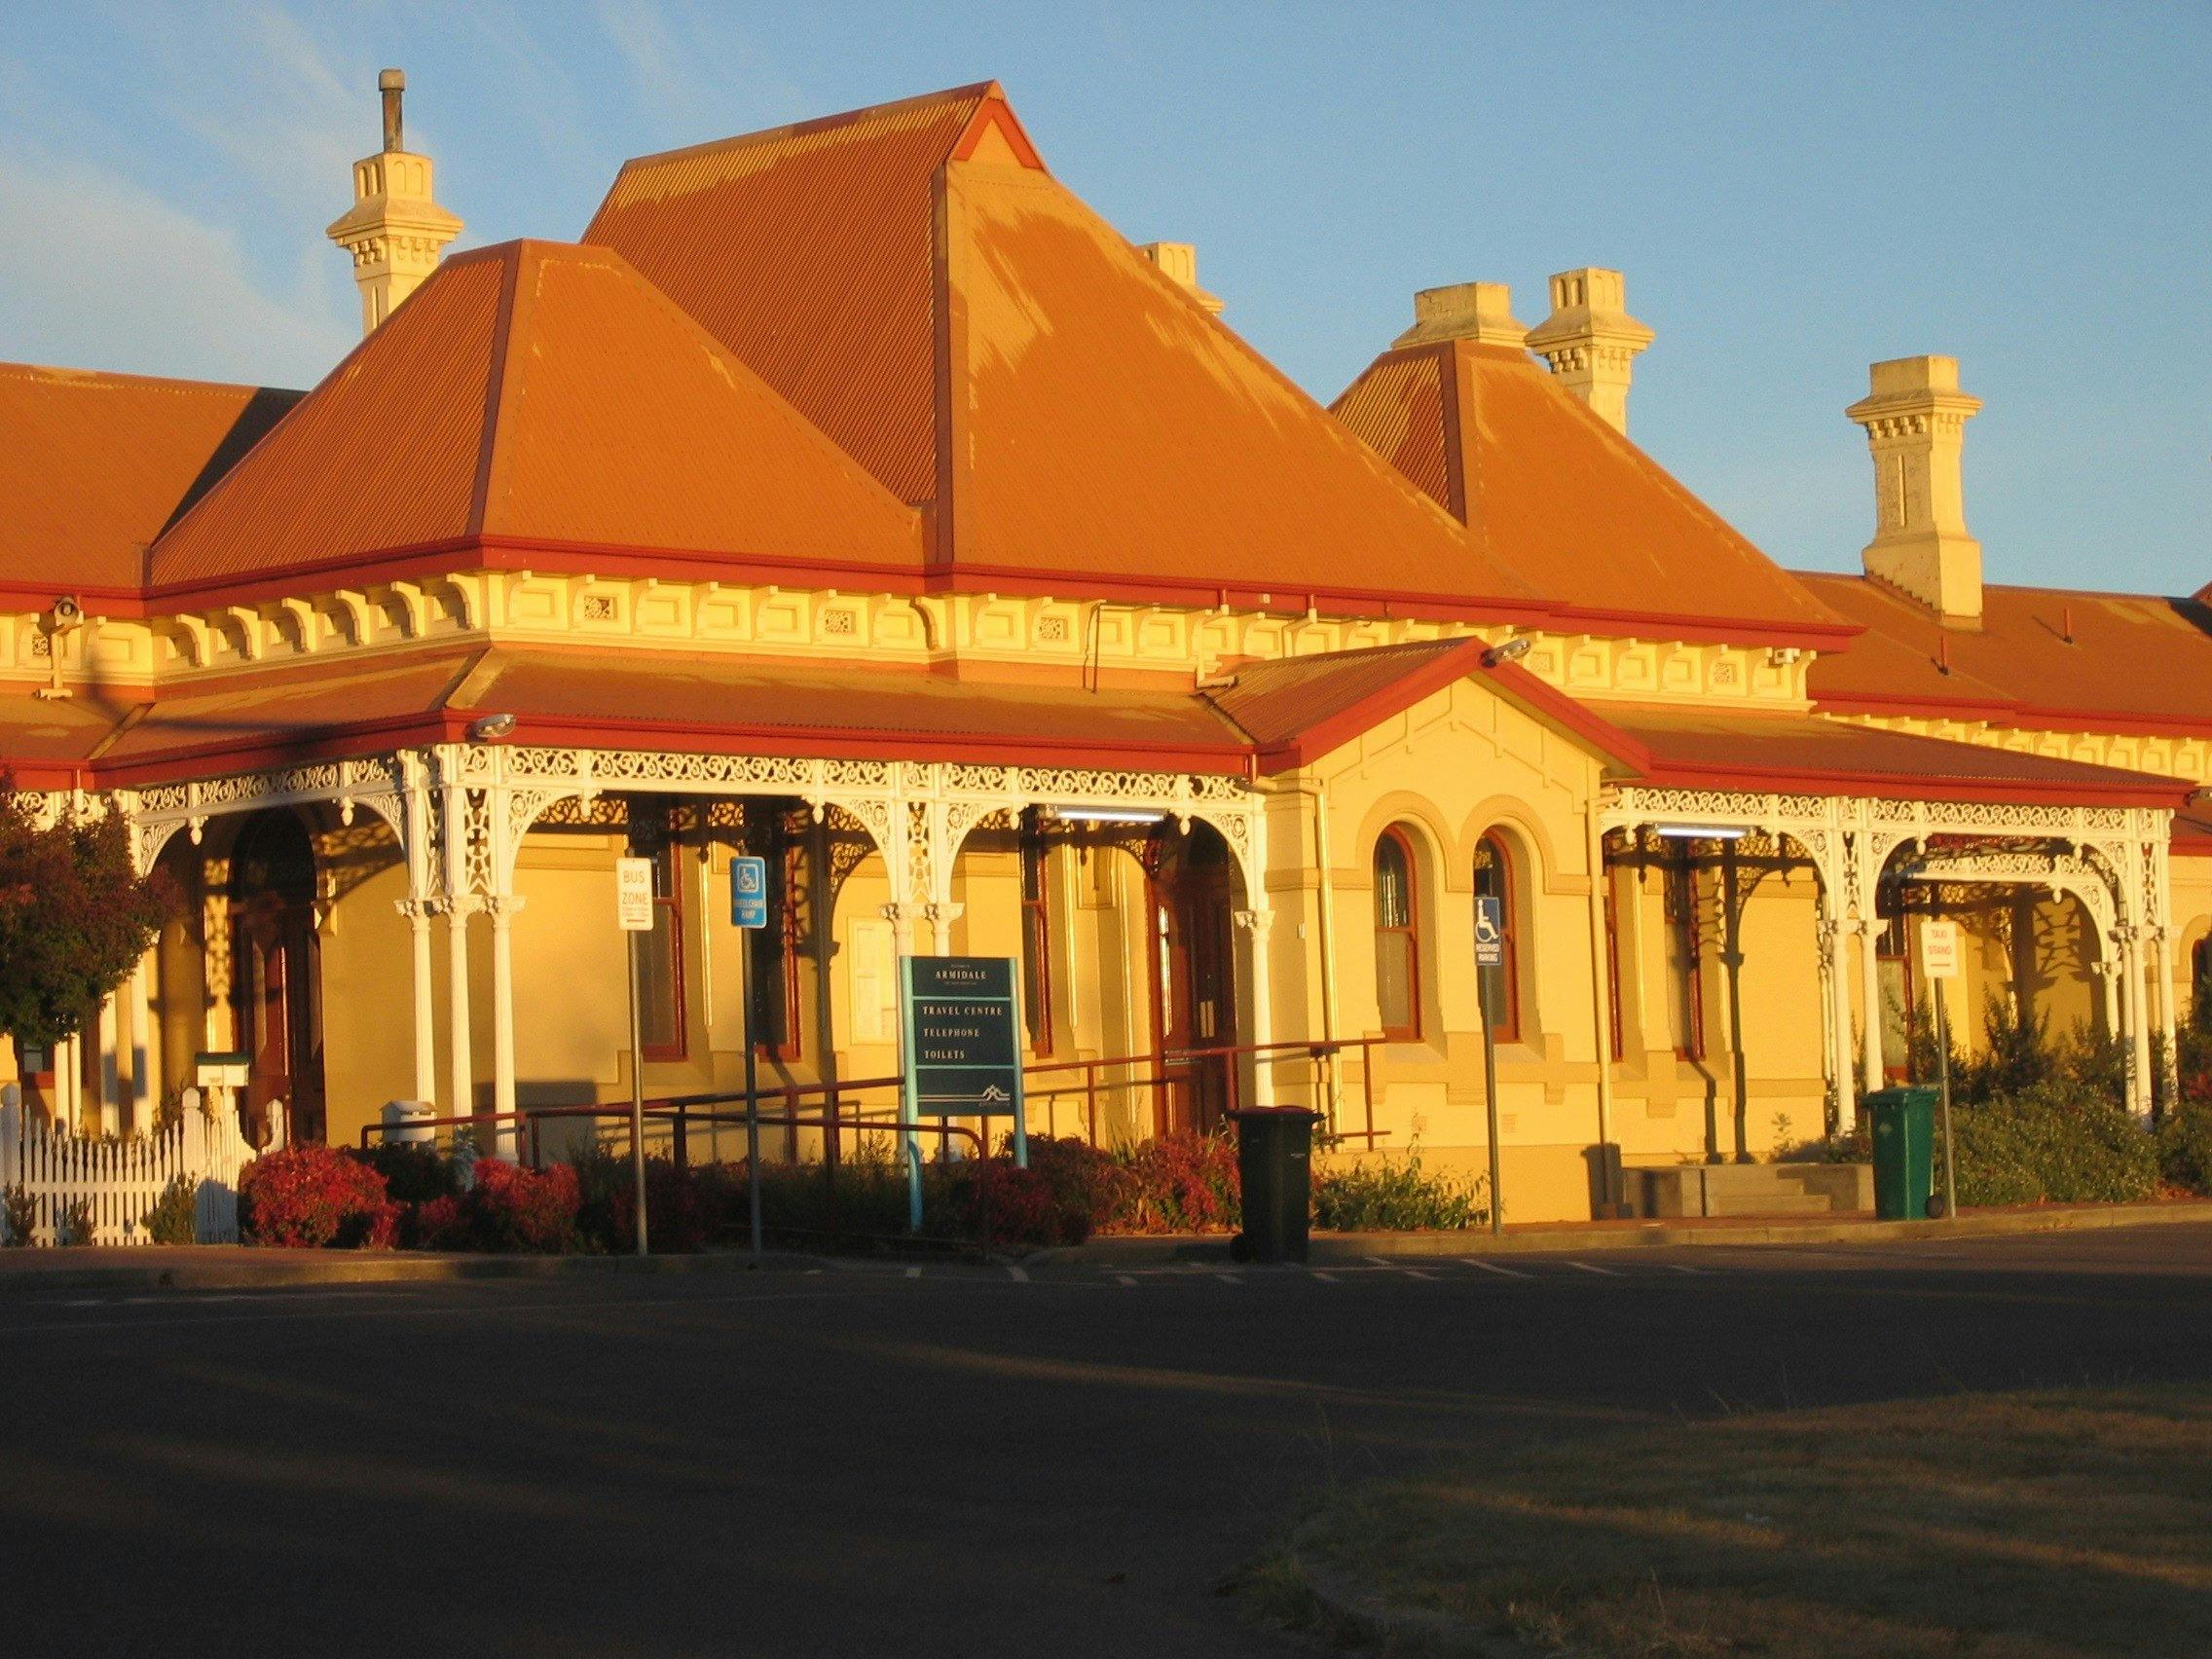 Armidale Railway Museum